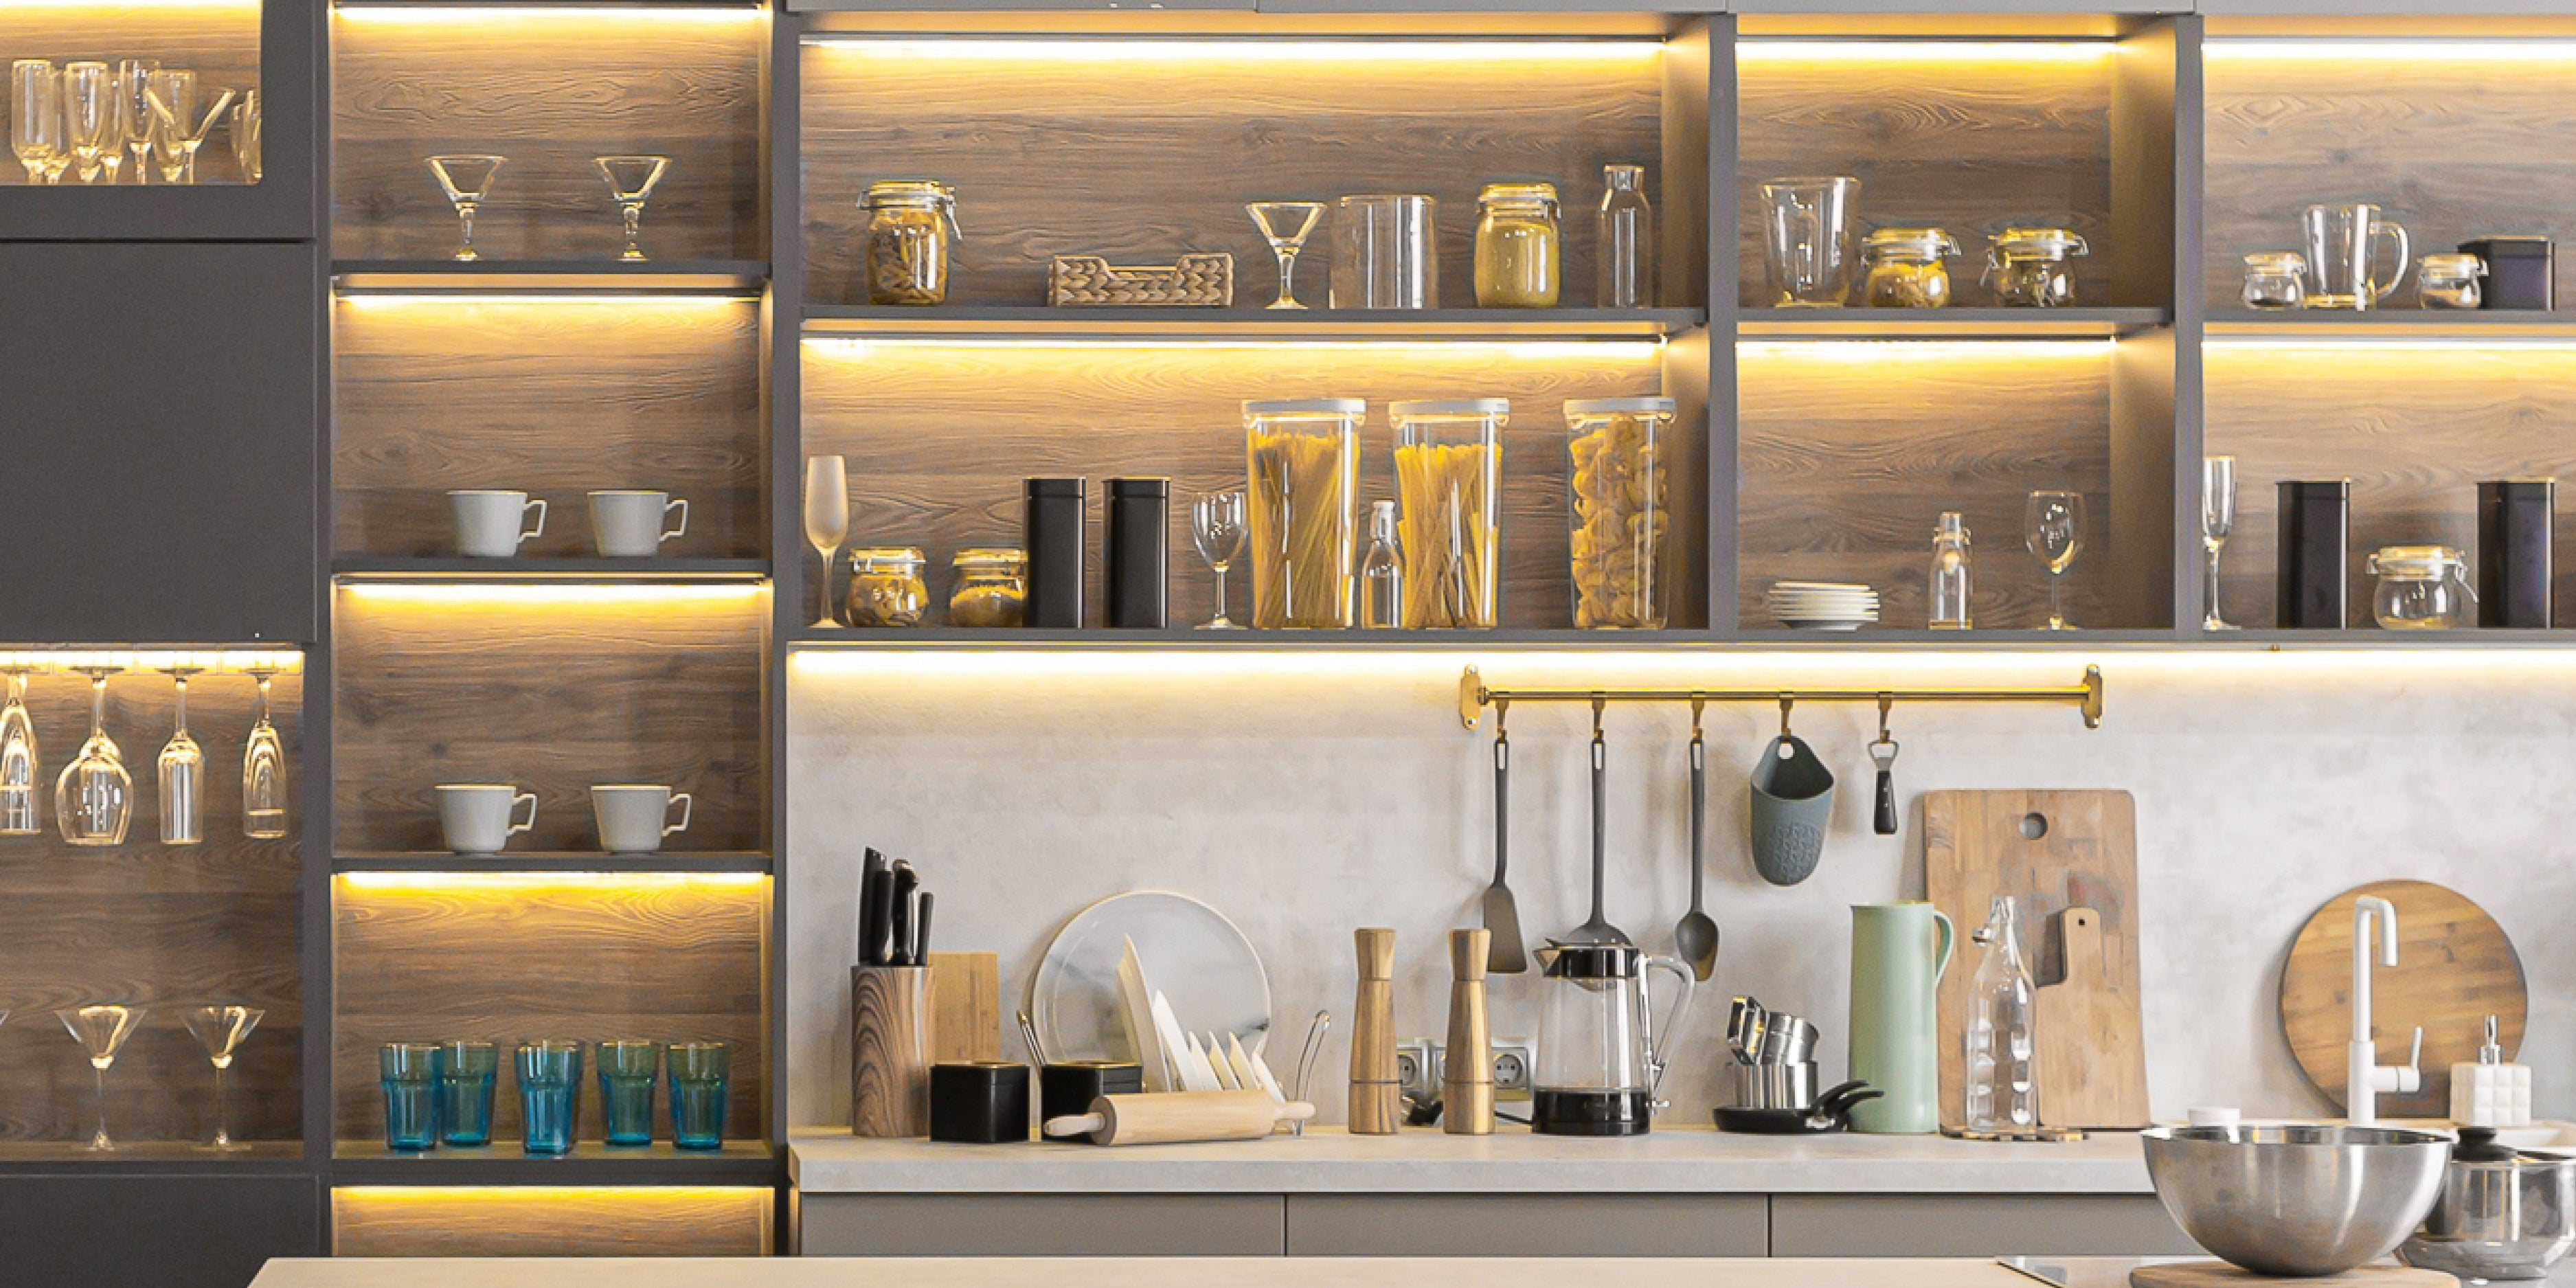 LED strip lighting under kitchen cabinets and shelves